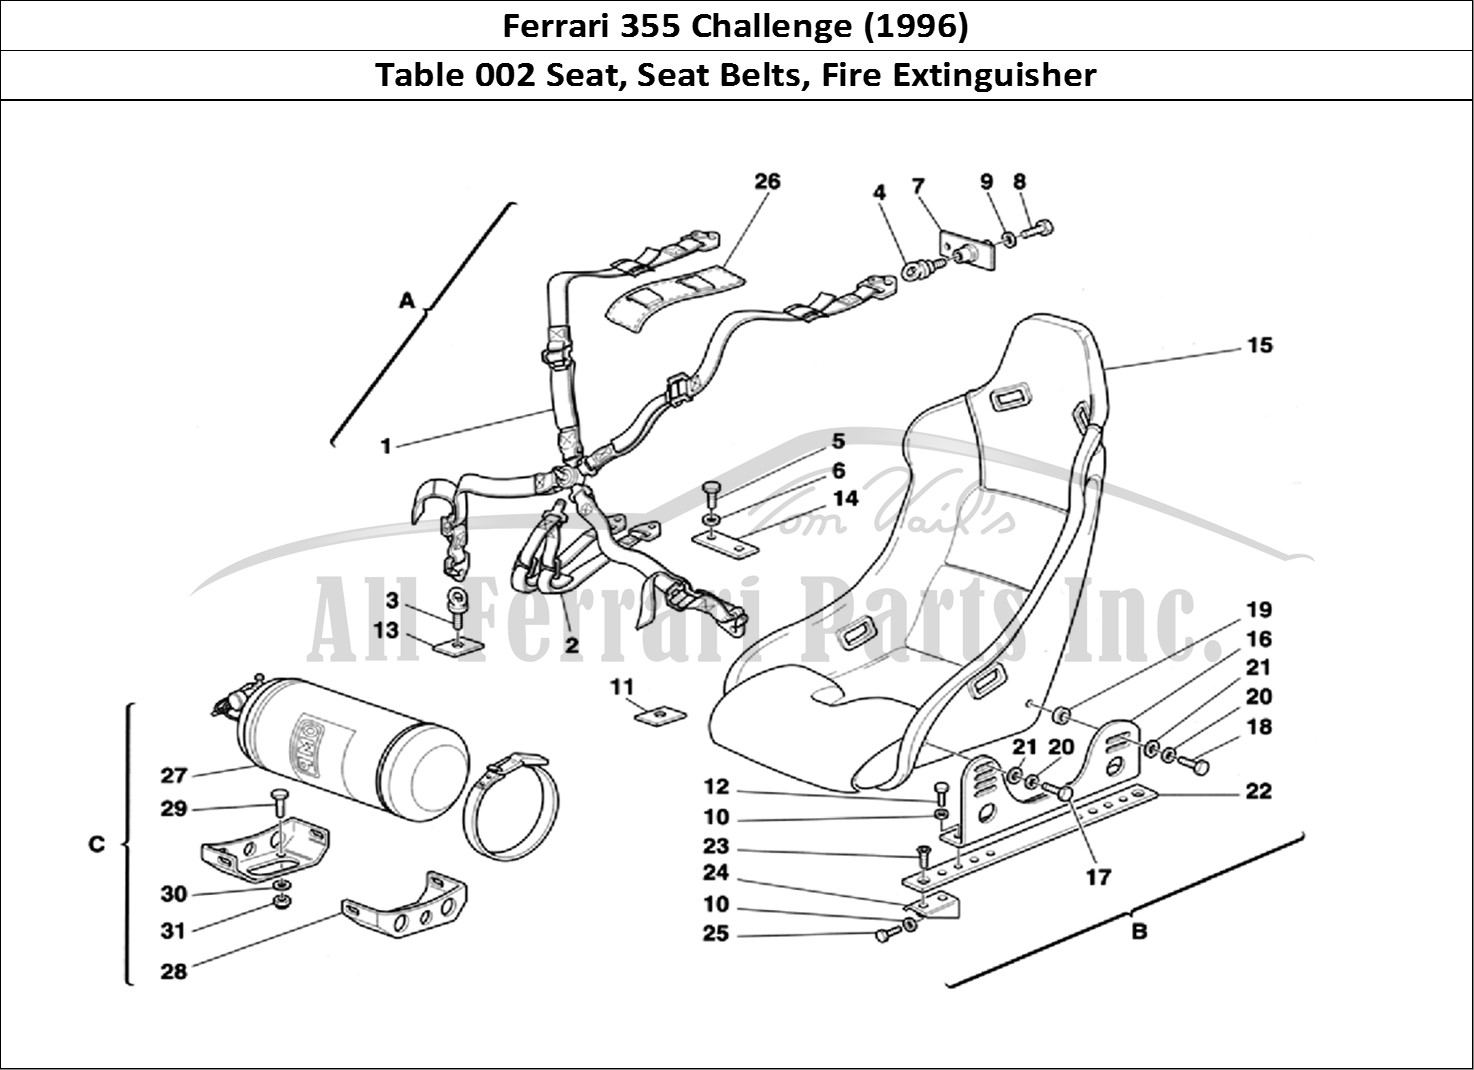 Ferrari Parts Ferrari 355 Challenge (1996) Page 002 Seat Safety Belts - Seat